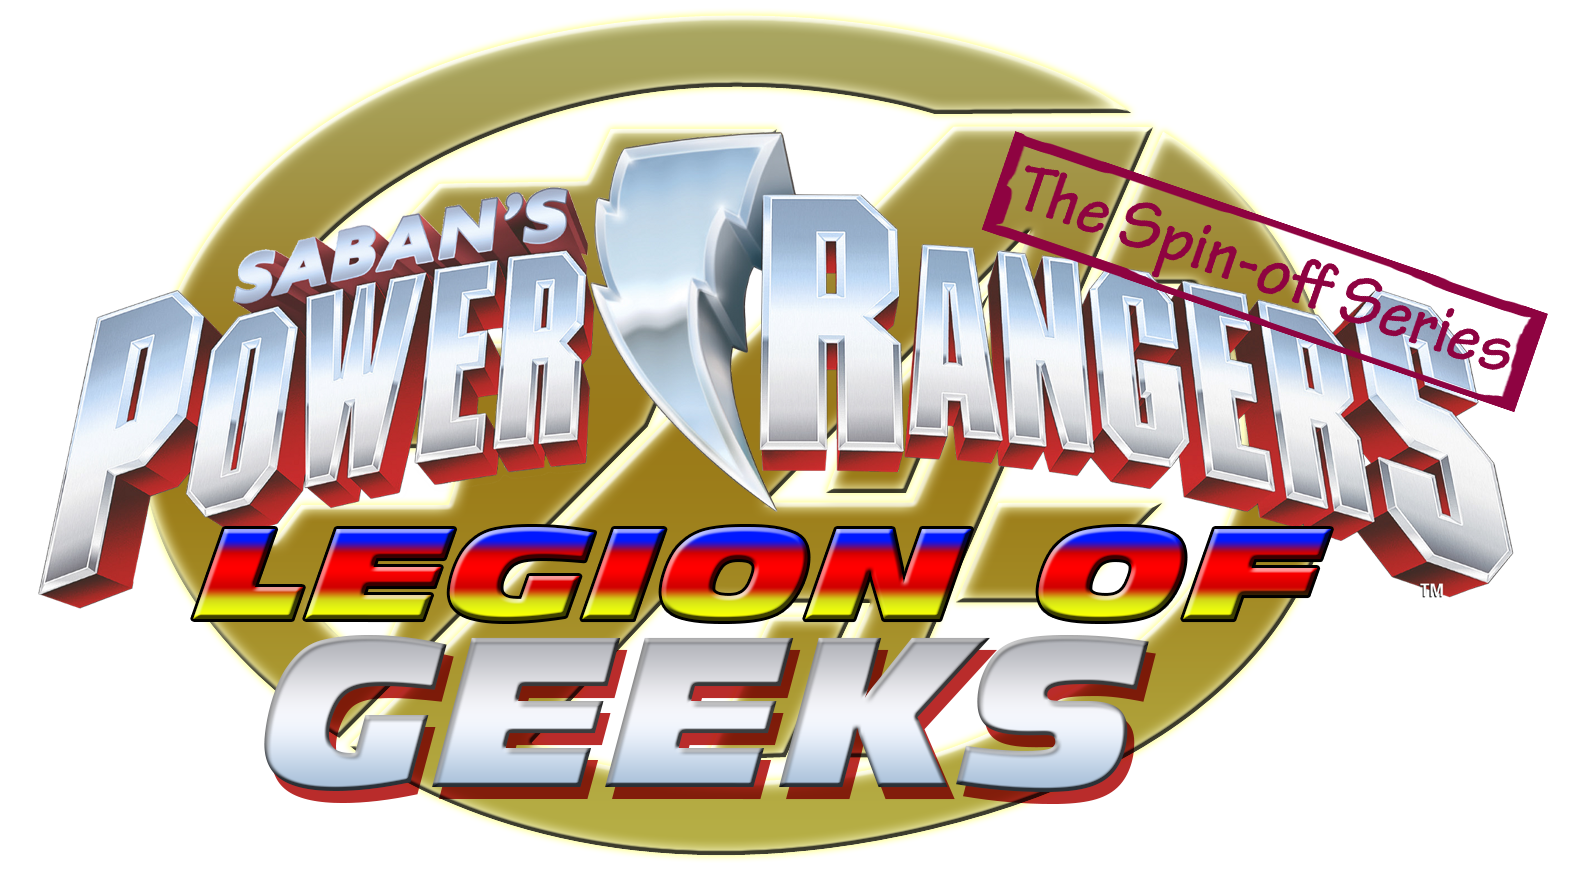 Power Rangers Anime, Power Rangers Fanon Wiki